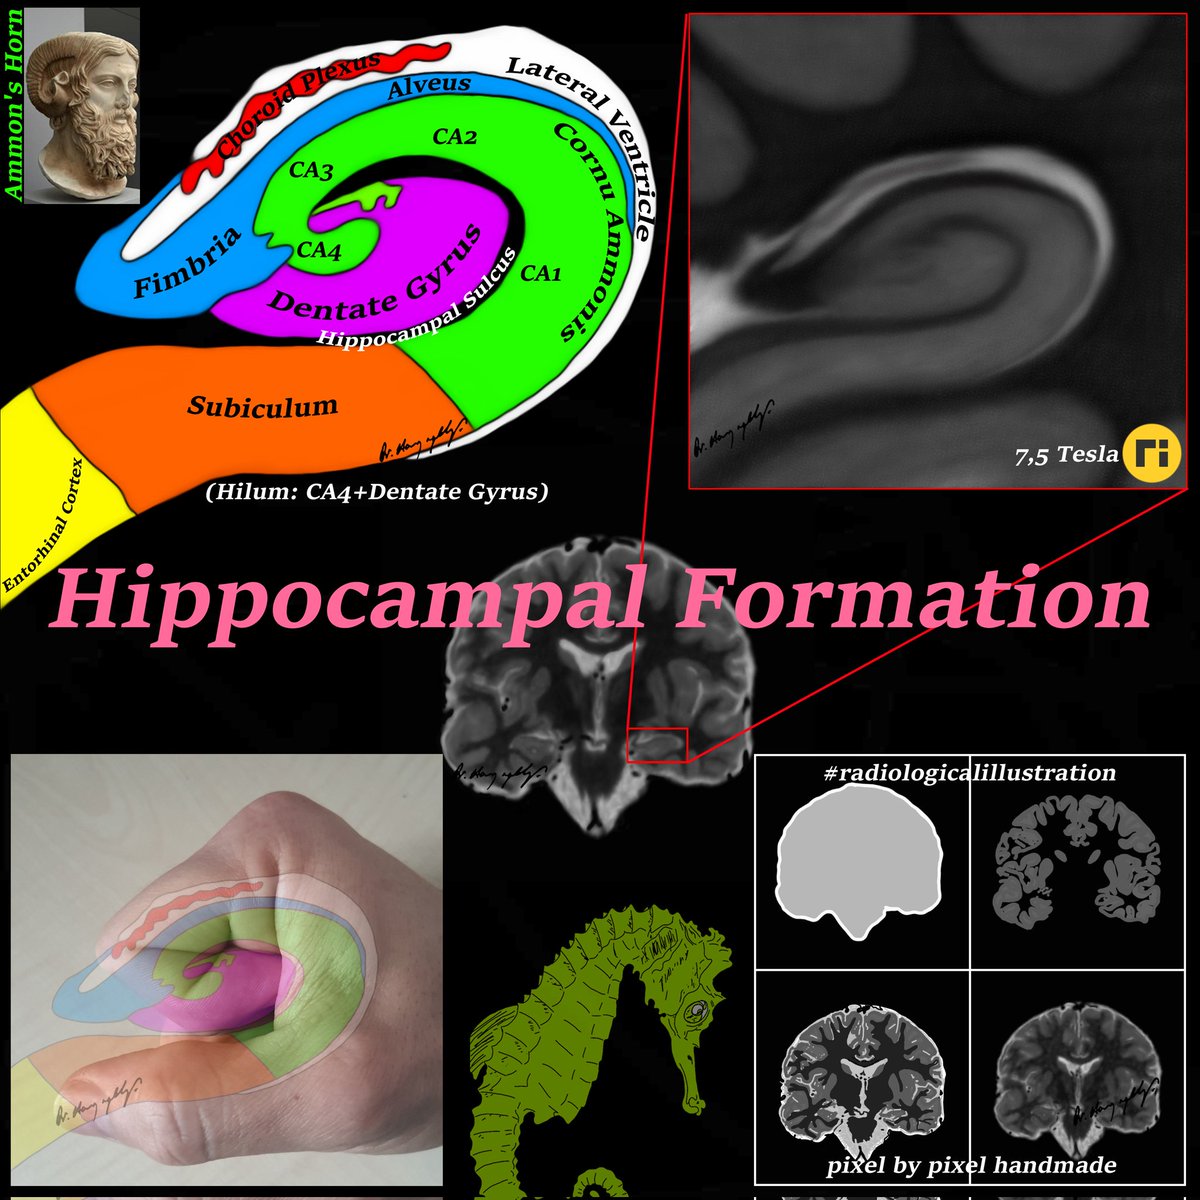 Radiologic Classification of Hippocampal Sclerosis doi.org/10.1111/epi.12… doi.org/10.3174/ajnr.A… #radiologicalillustration ✍️ pixel by pixel handmade!